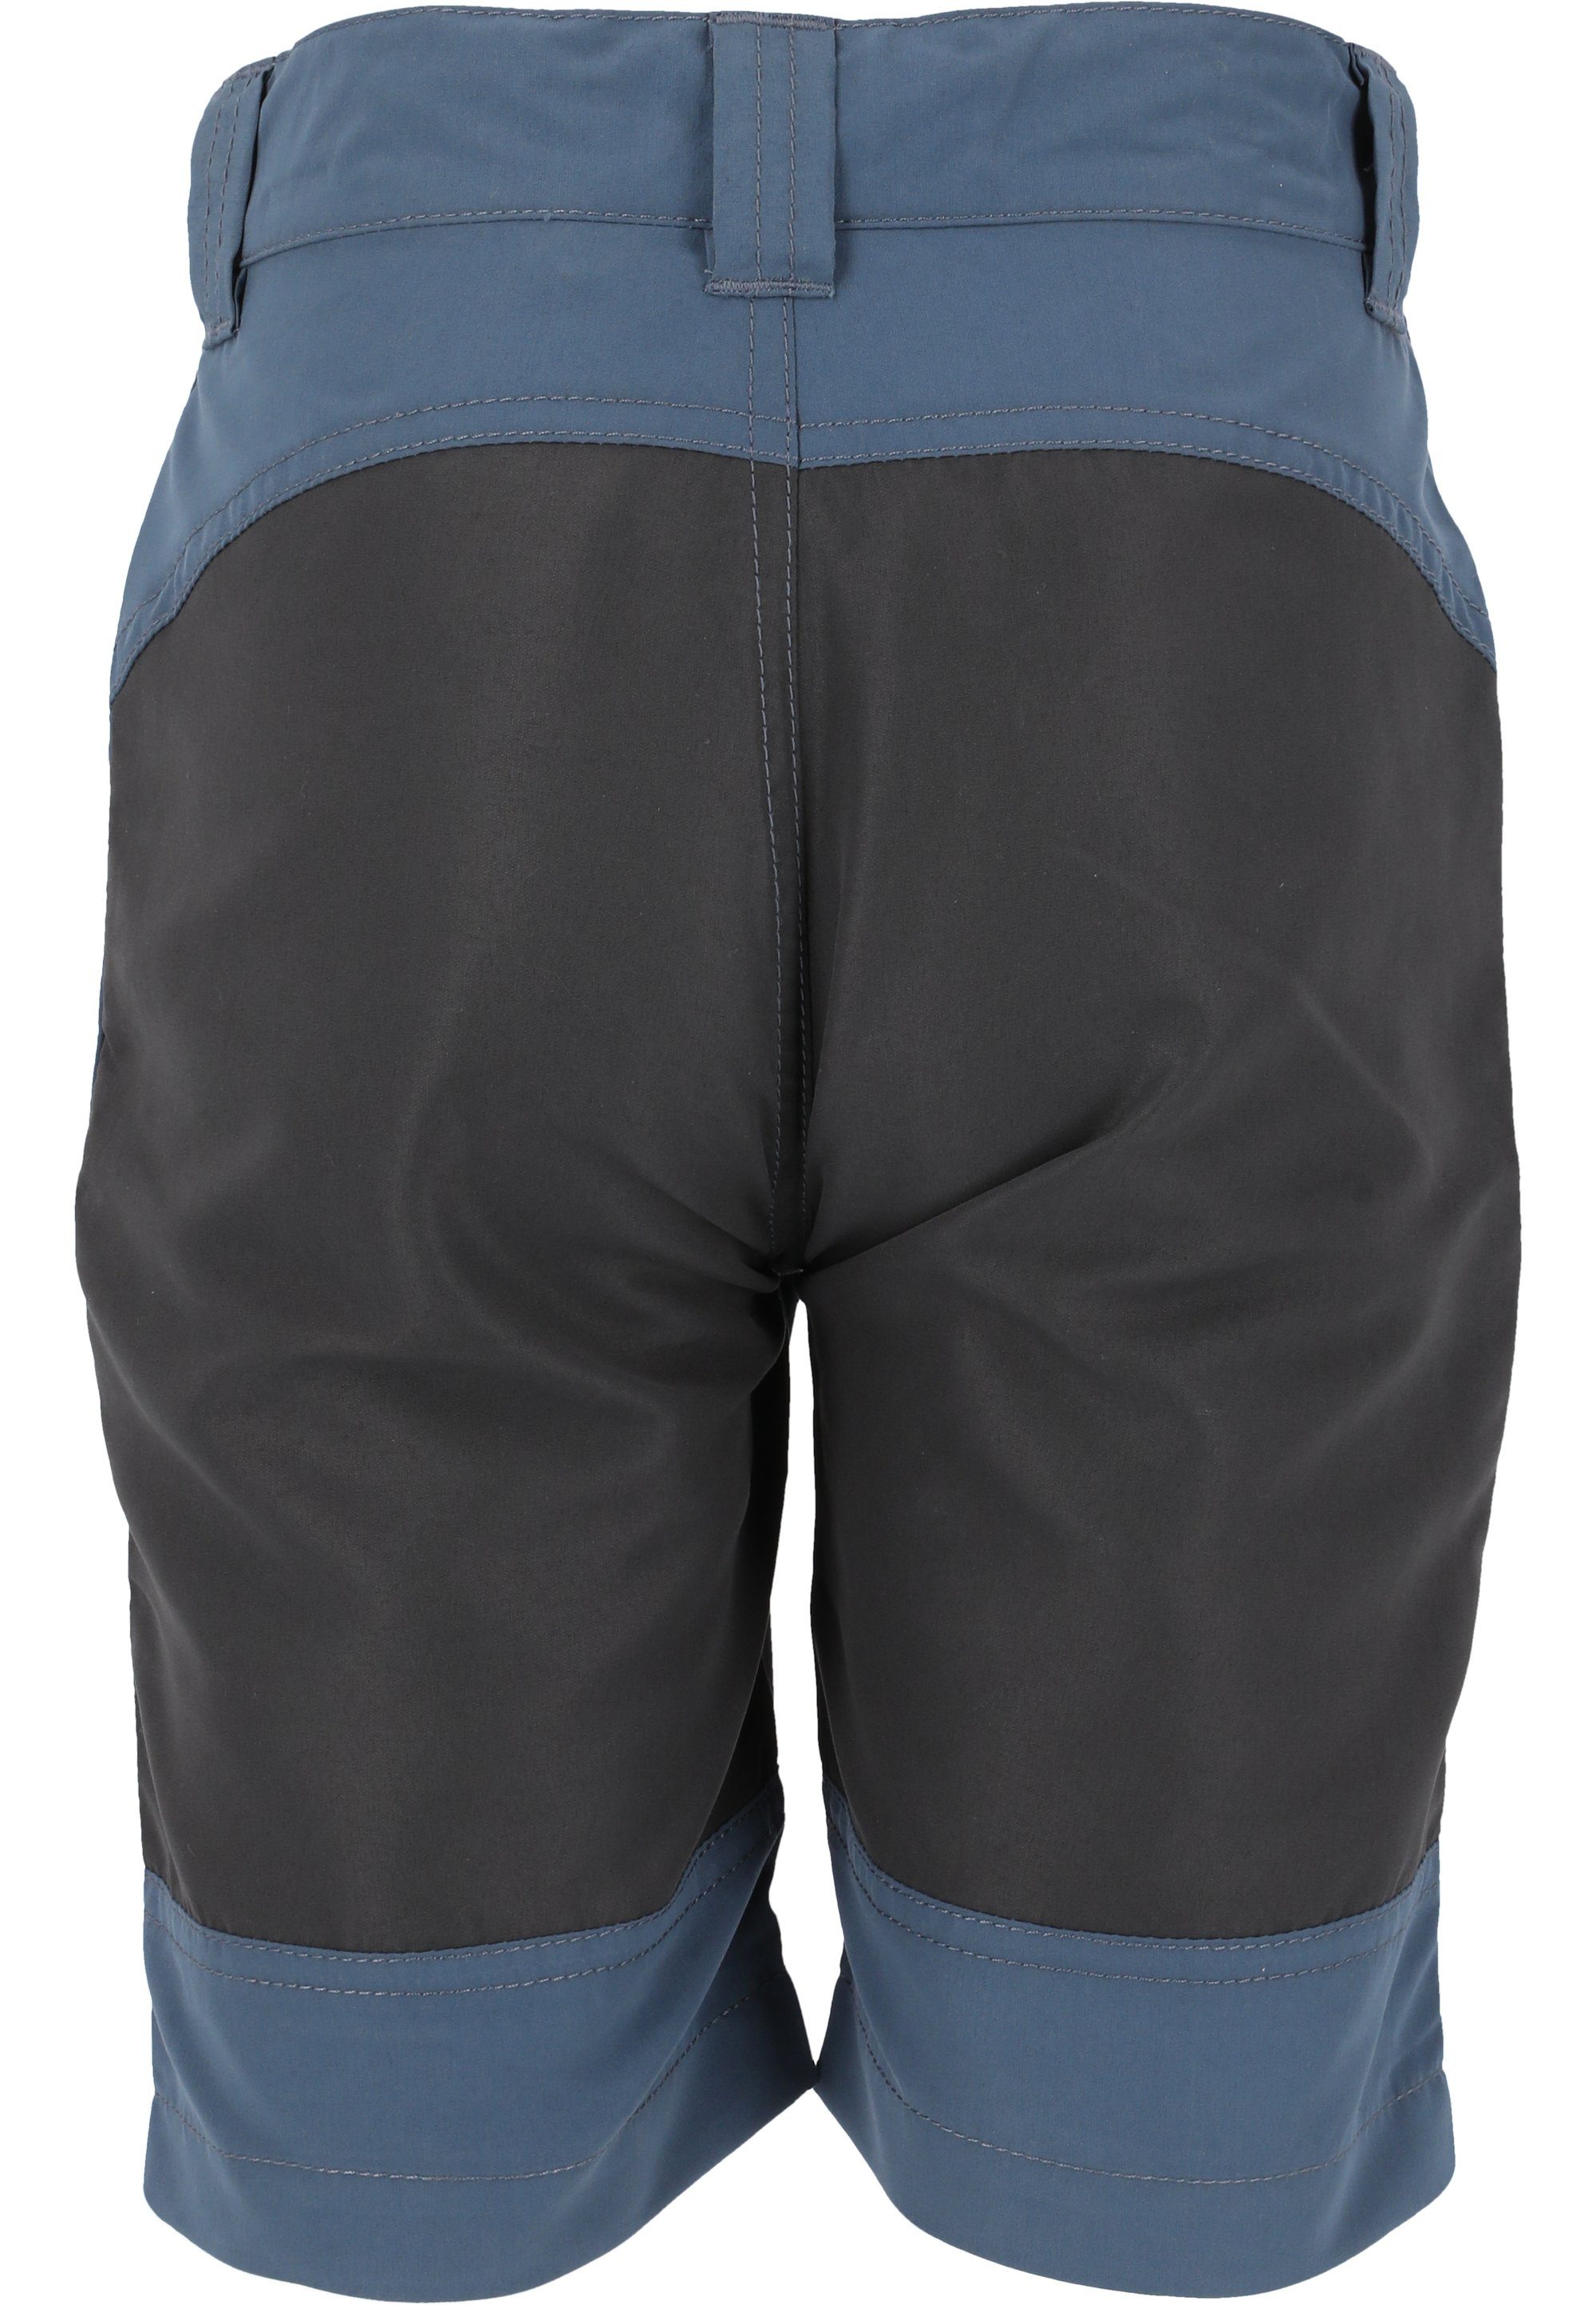 Shorts Atlantic blau-schwarz aus Material ZIGZAG robustem